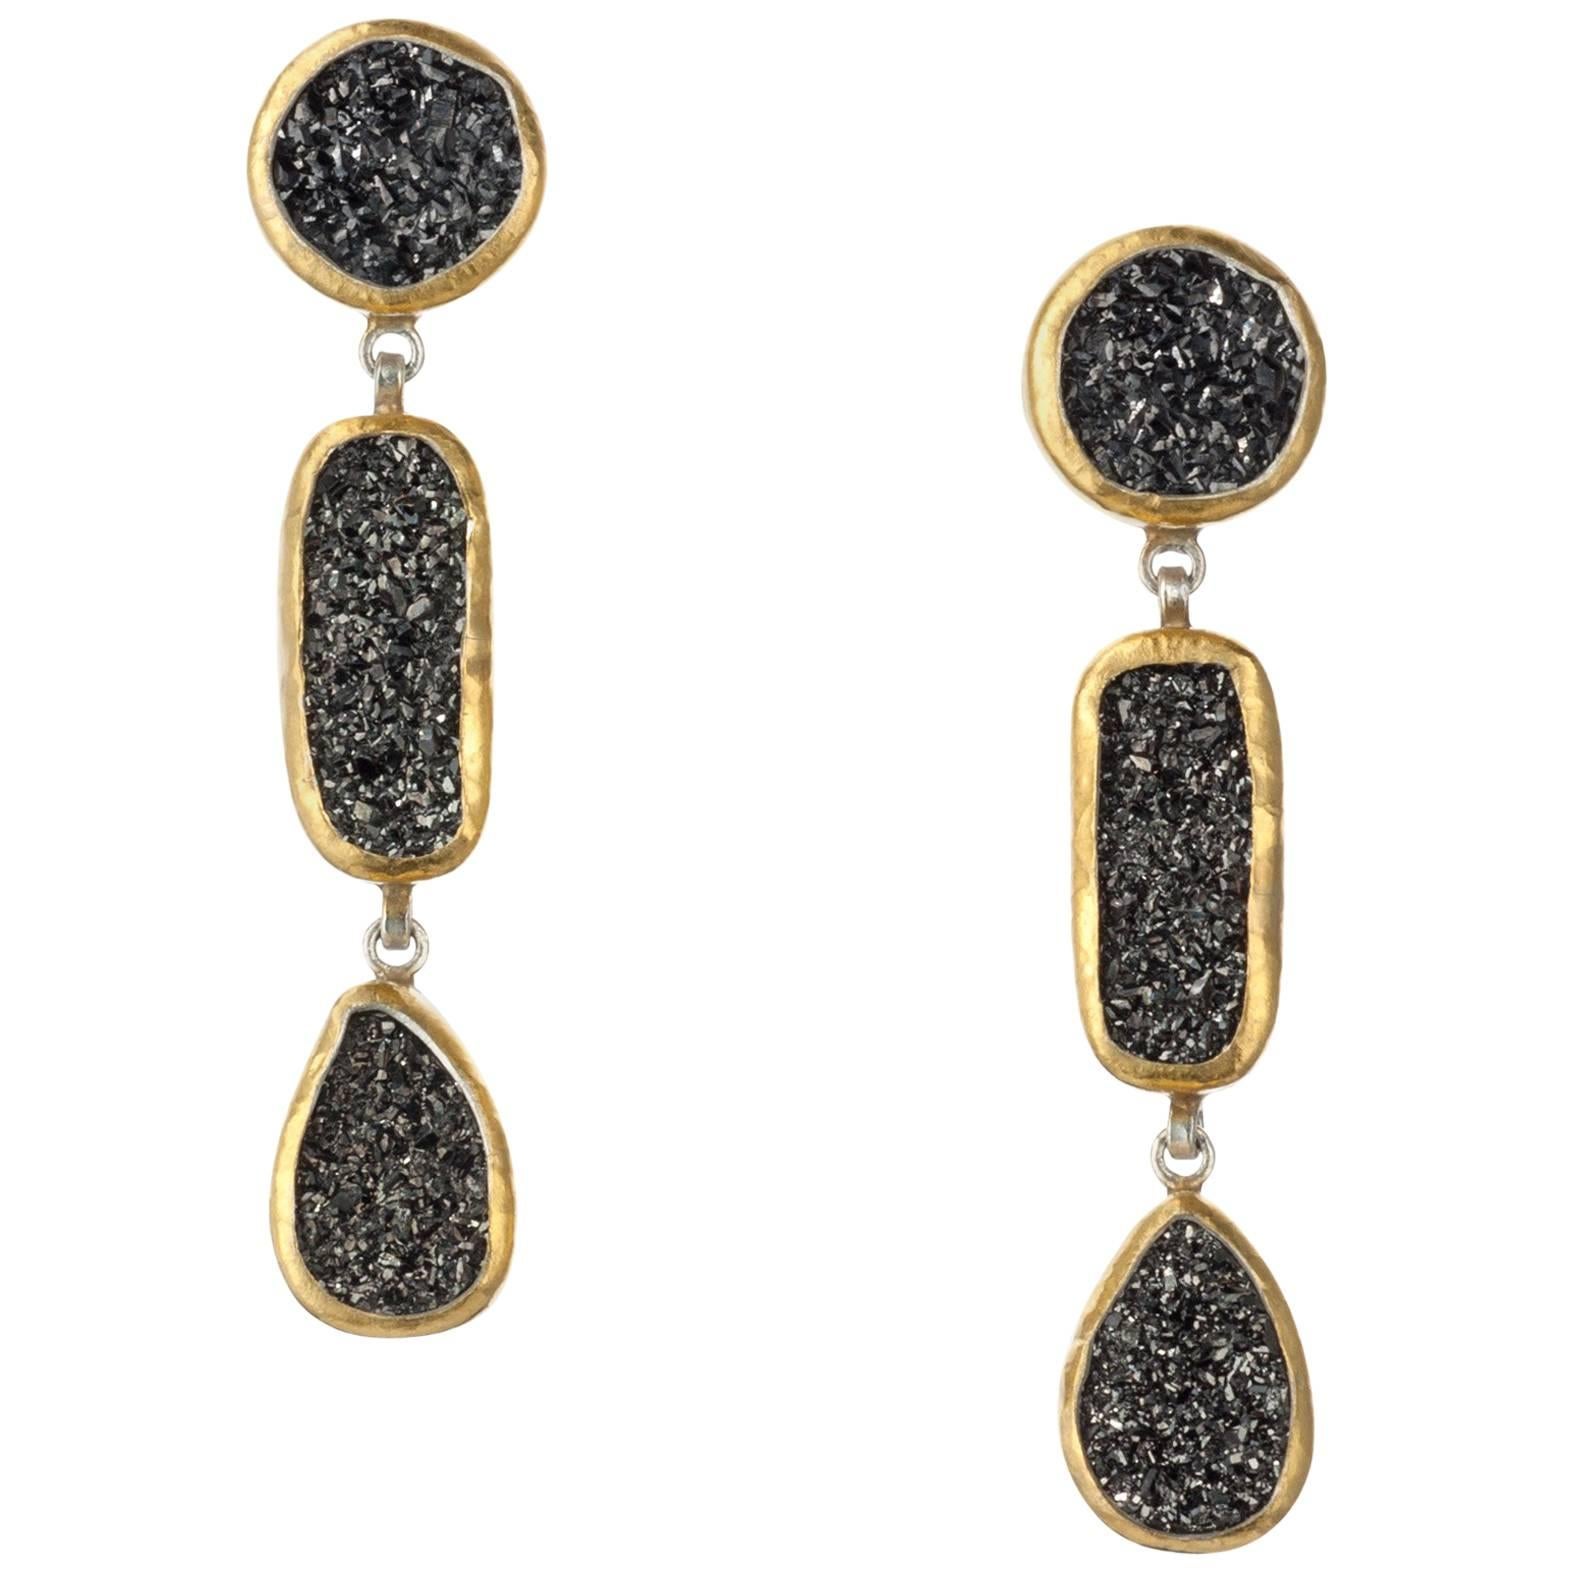 Gurhan “Mystere” Drusy Quartz Drop Earrings in 24 Karat Yellow Gold and Sterling